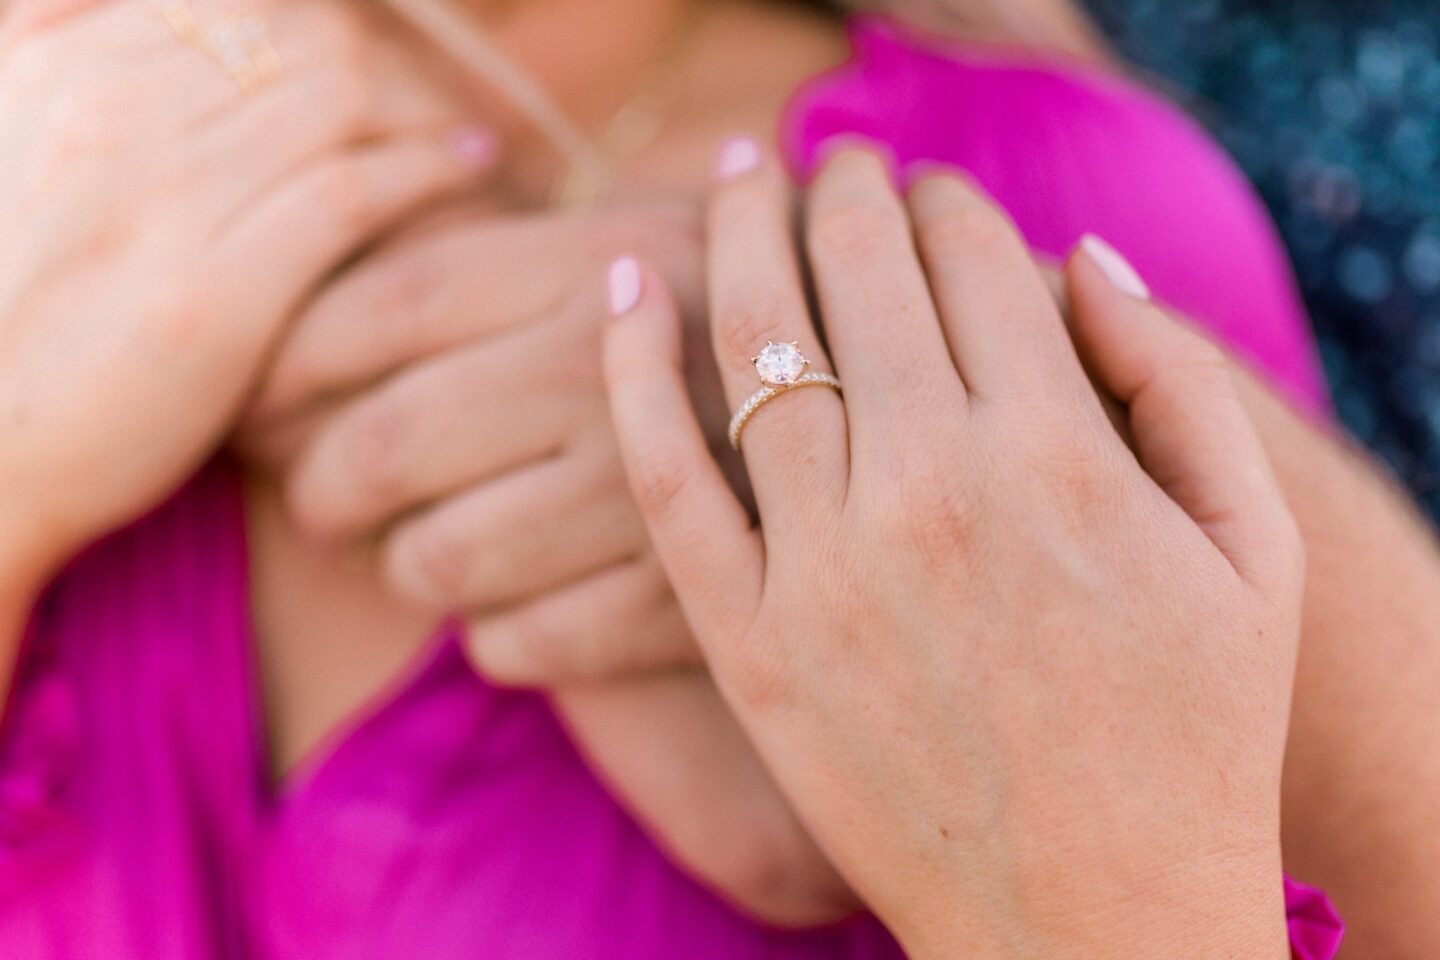 Princess Bride Diamonds engagement ring